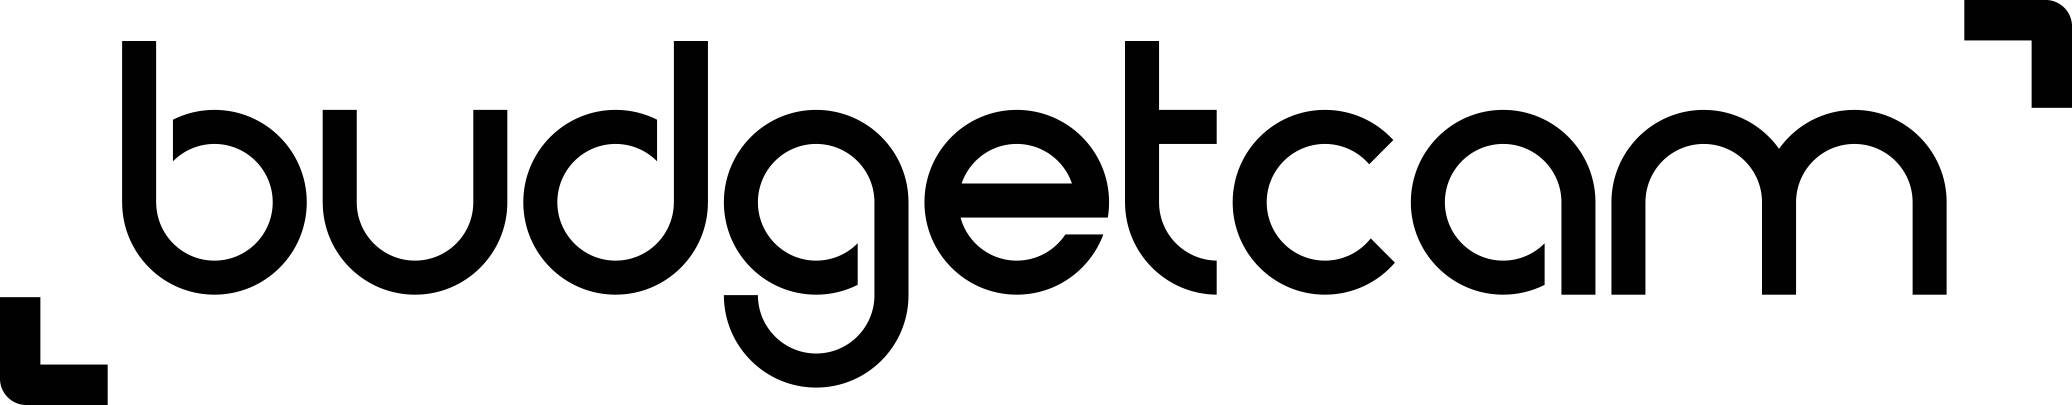 BC-logo-Black.png